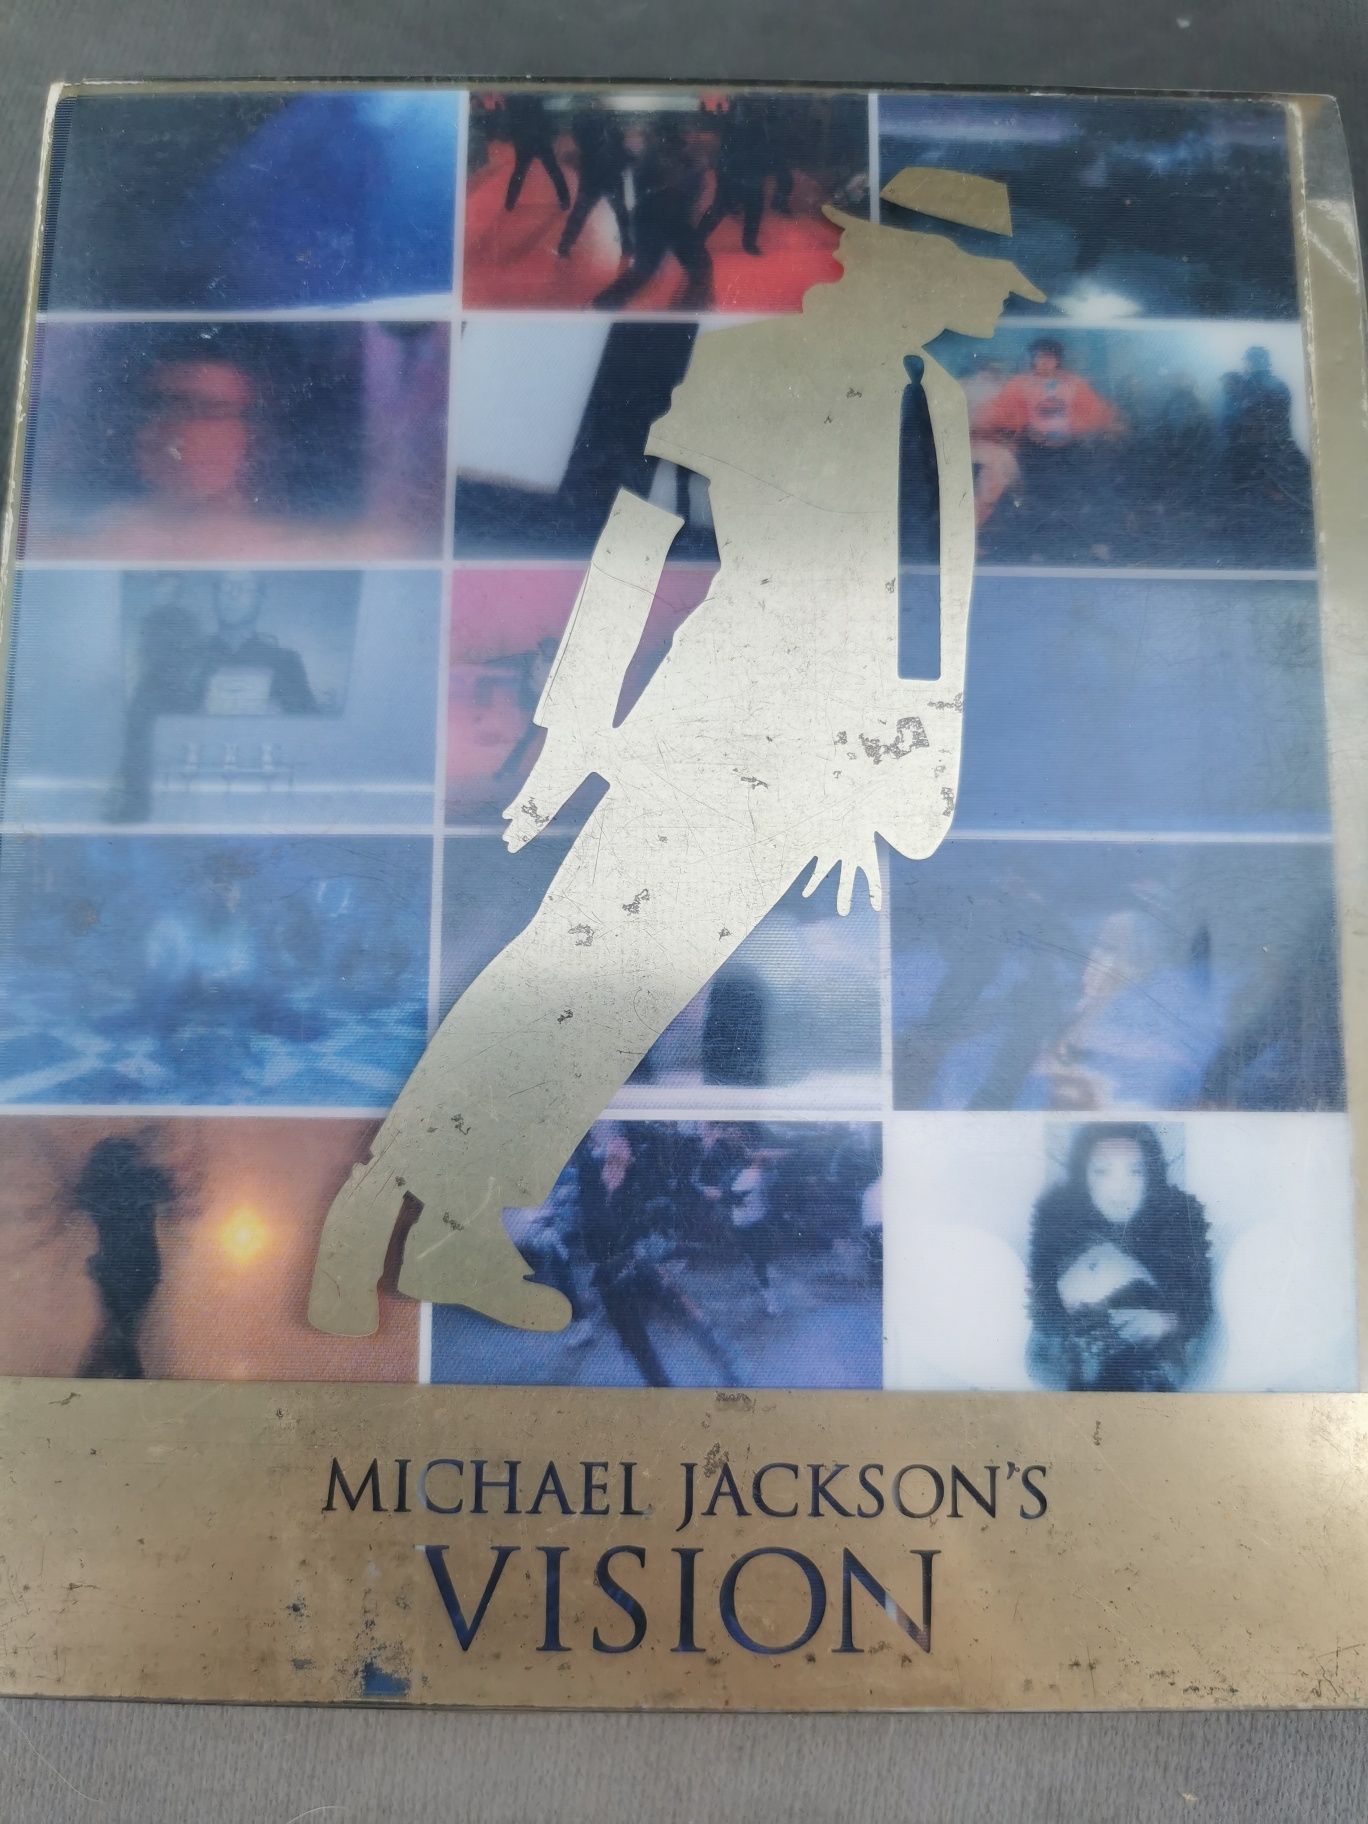 3 DVDS do Michael Jackson